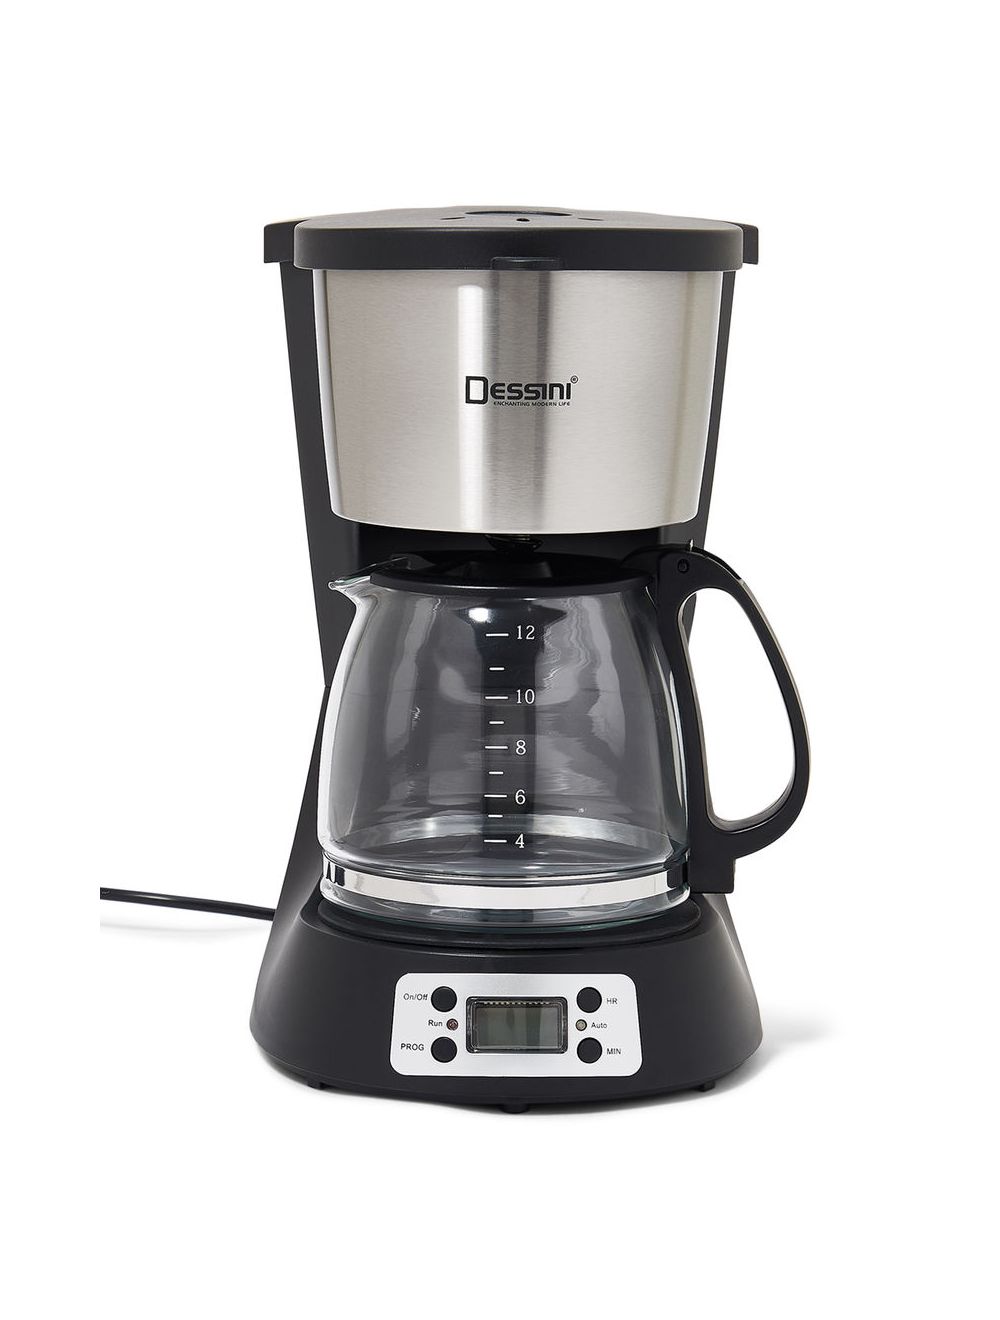 Dessini Electric Coffee Maker 12 Cup-AKAT62